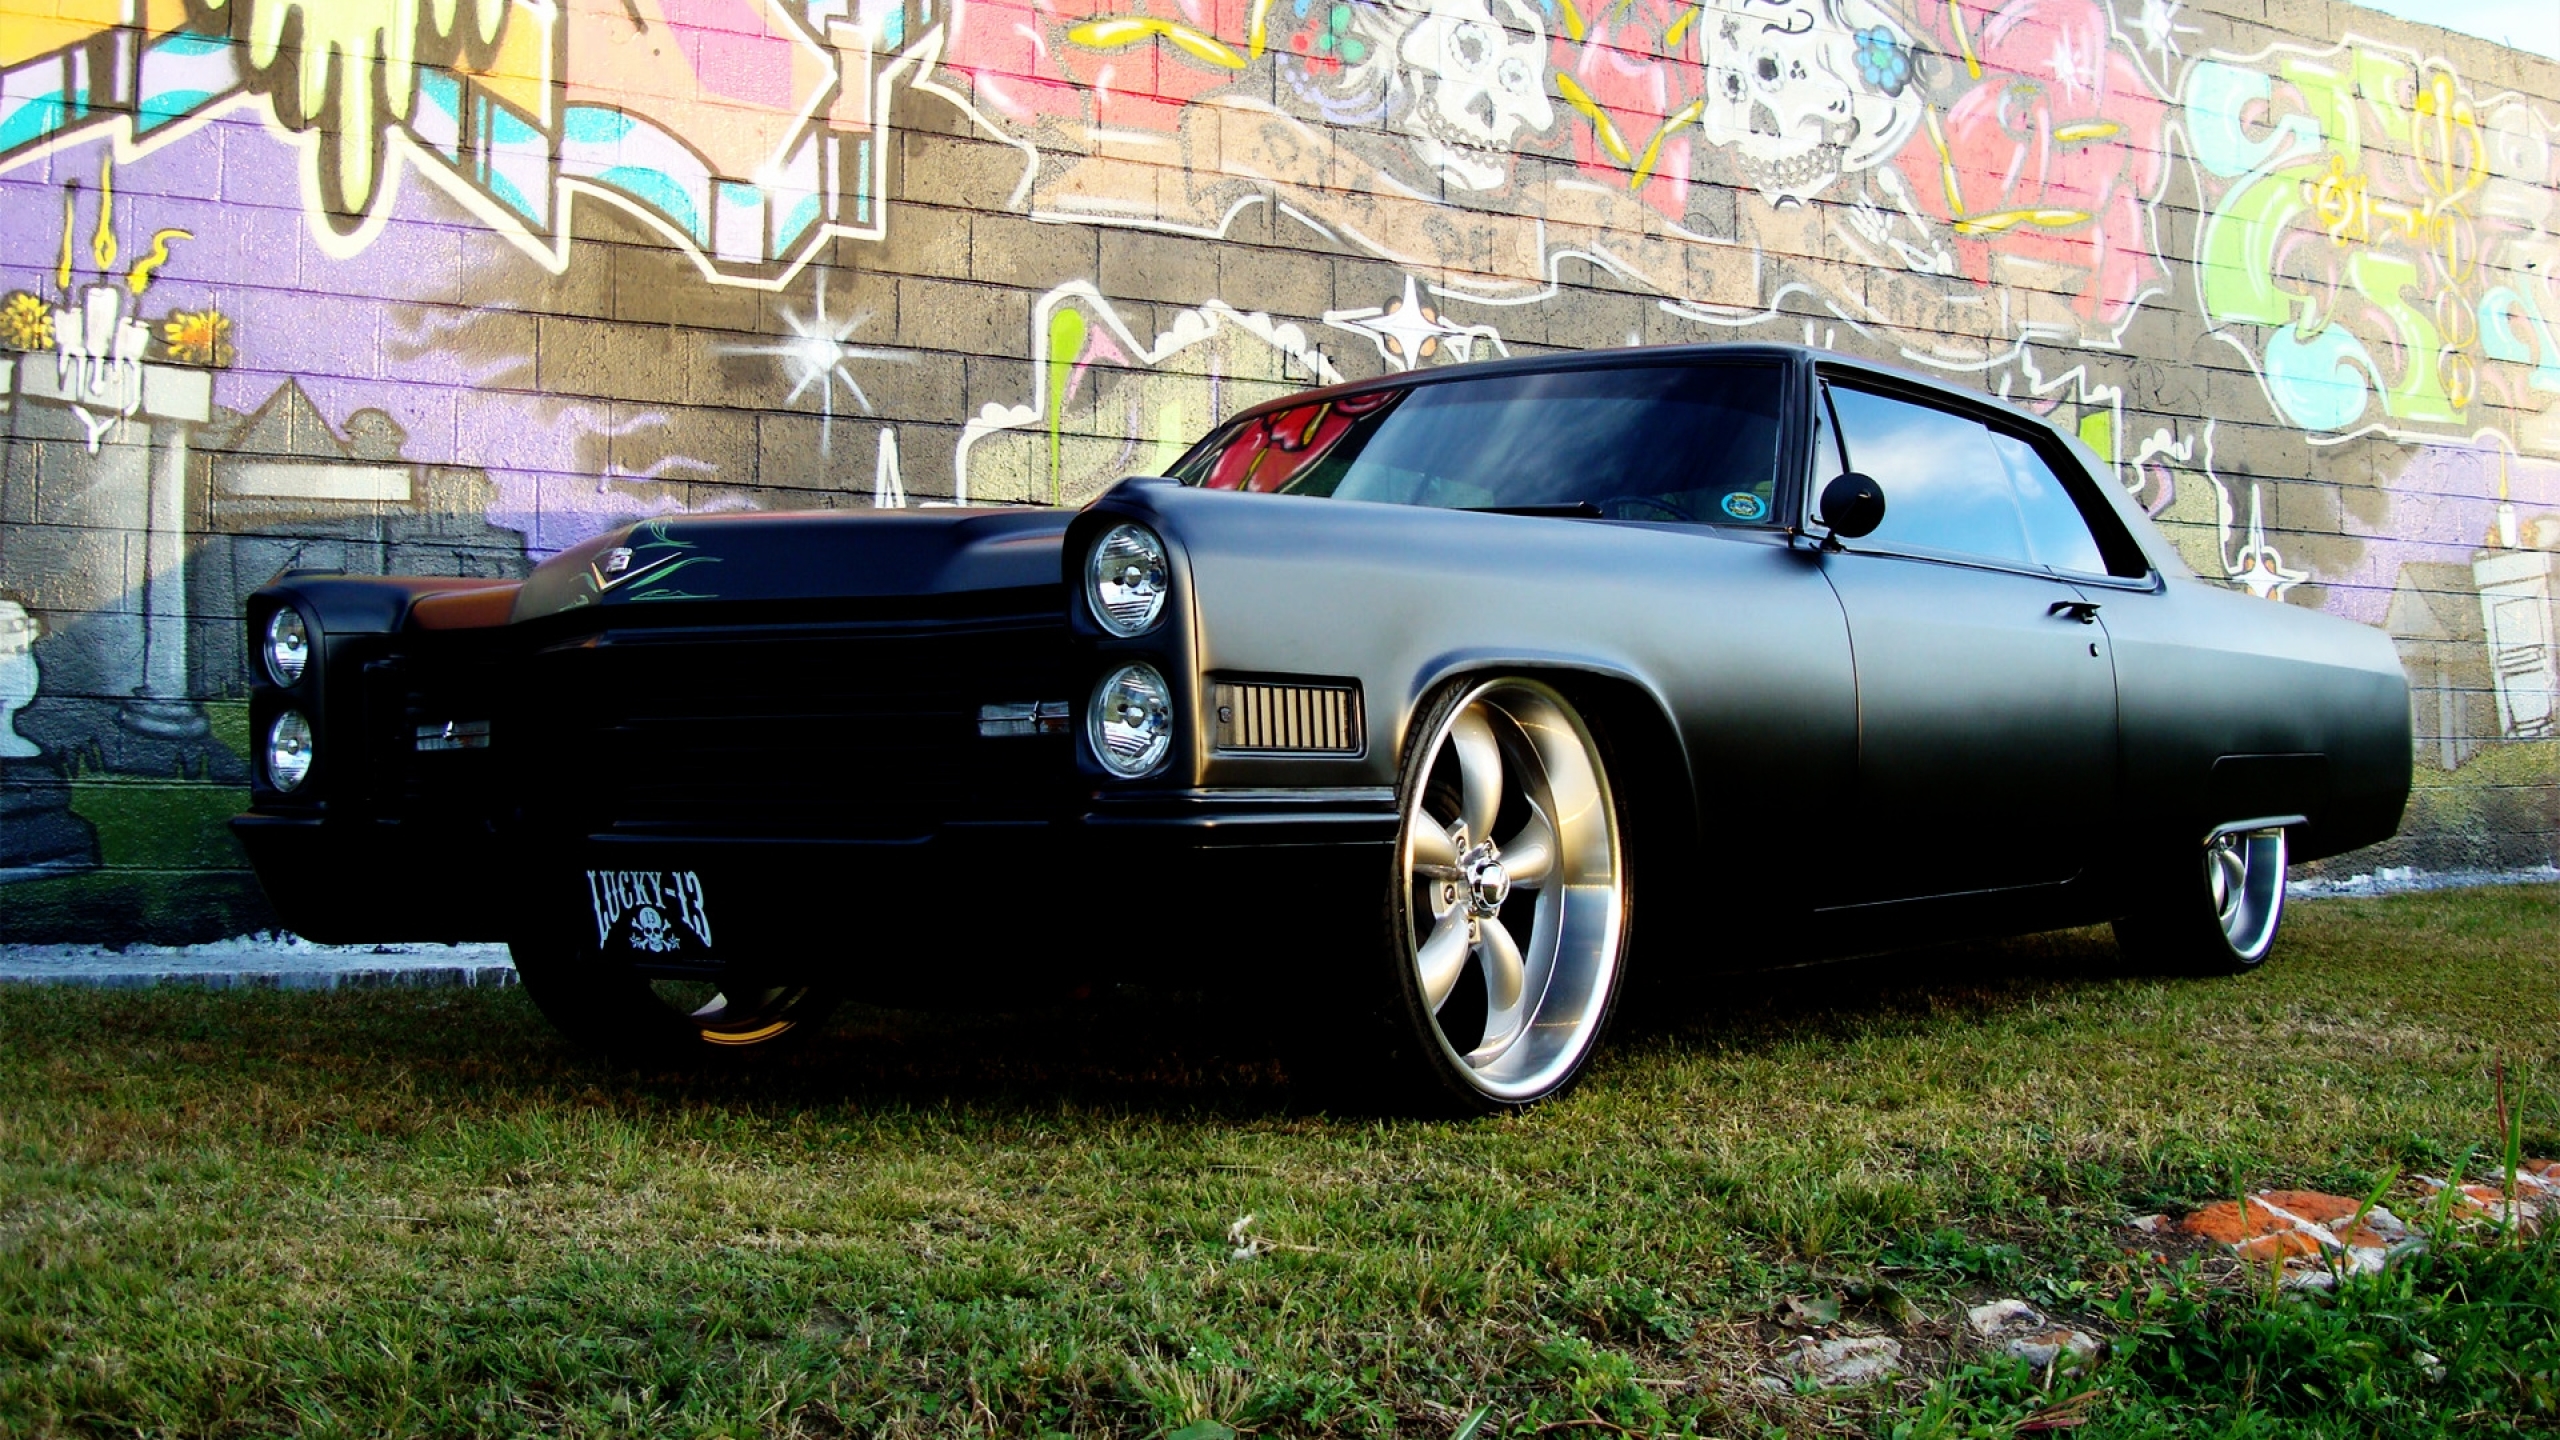 General 2560x1440 car vehicle graffiti black cars Pontiac Pontiac GTO muscle cars American cars